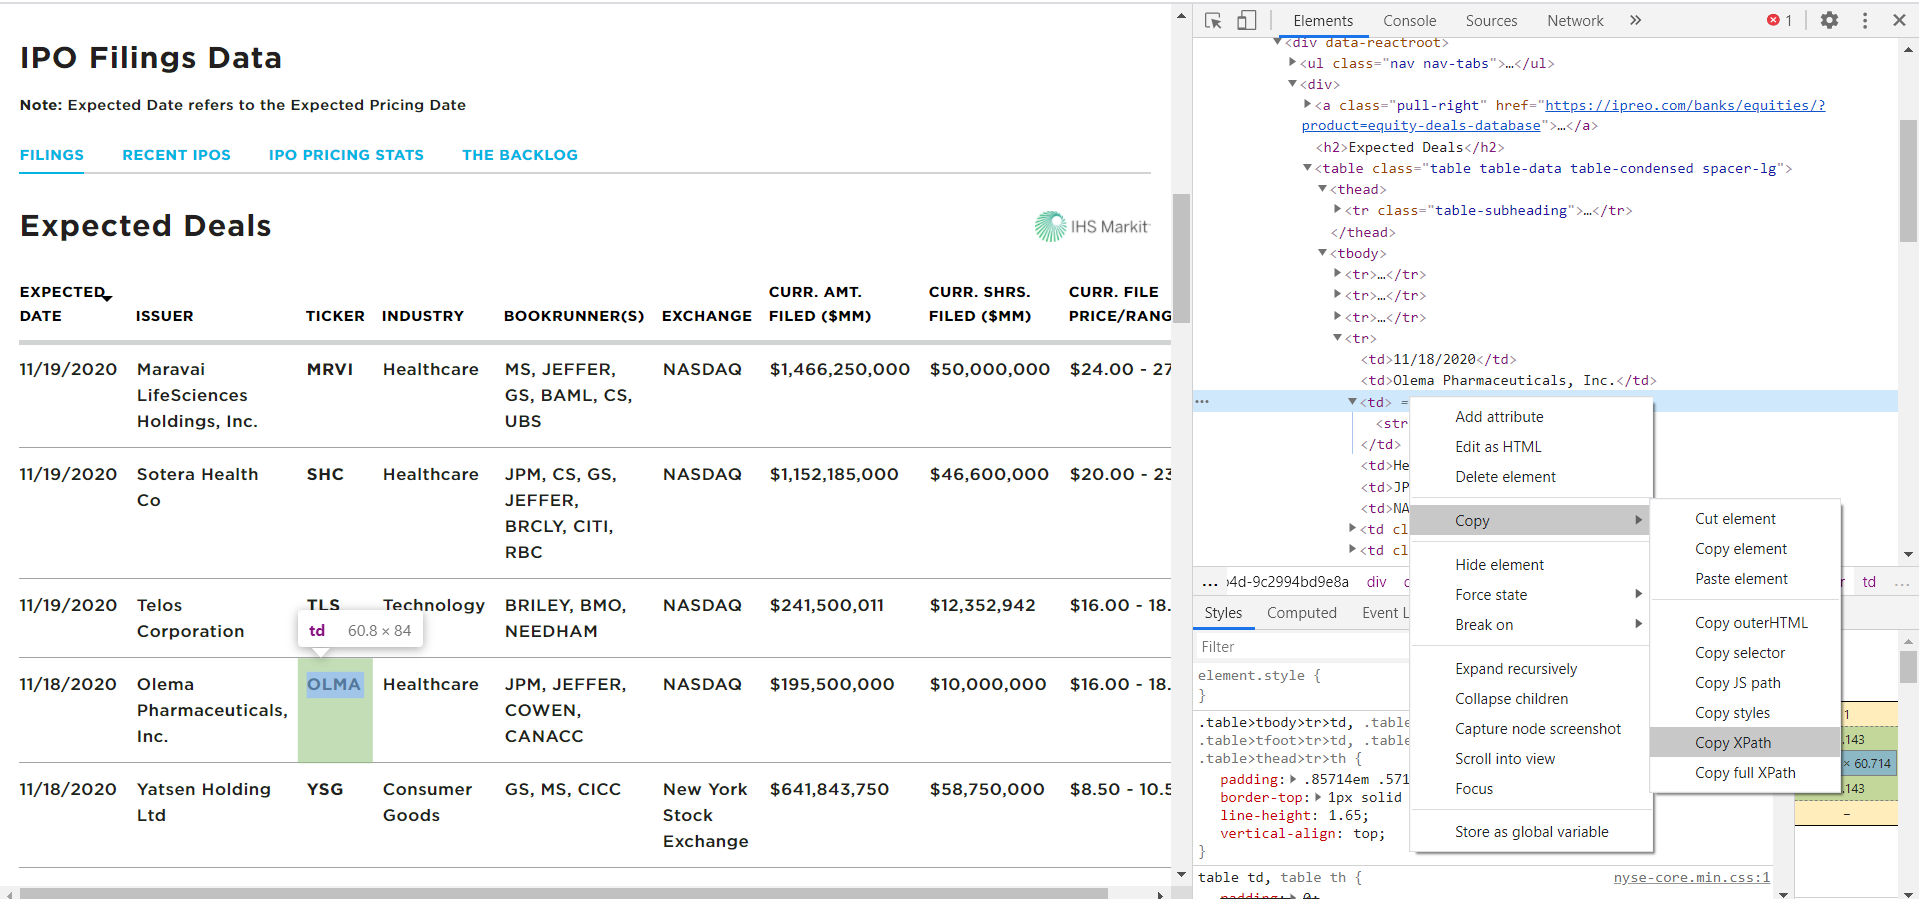 NYSE Web Tables Example Copy Xpath 2